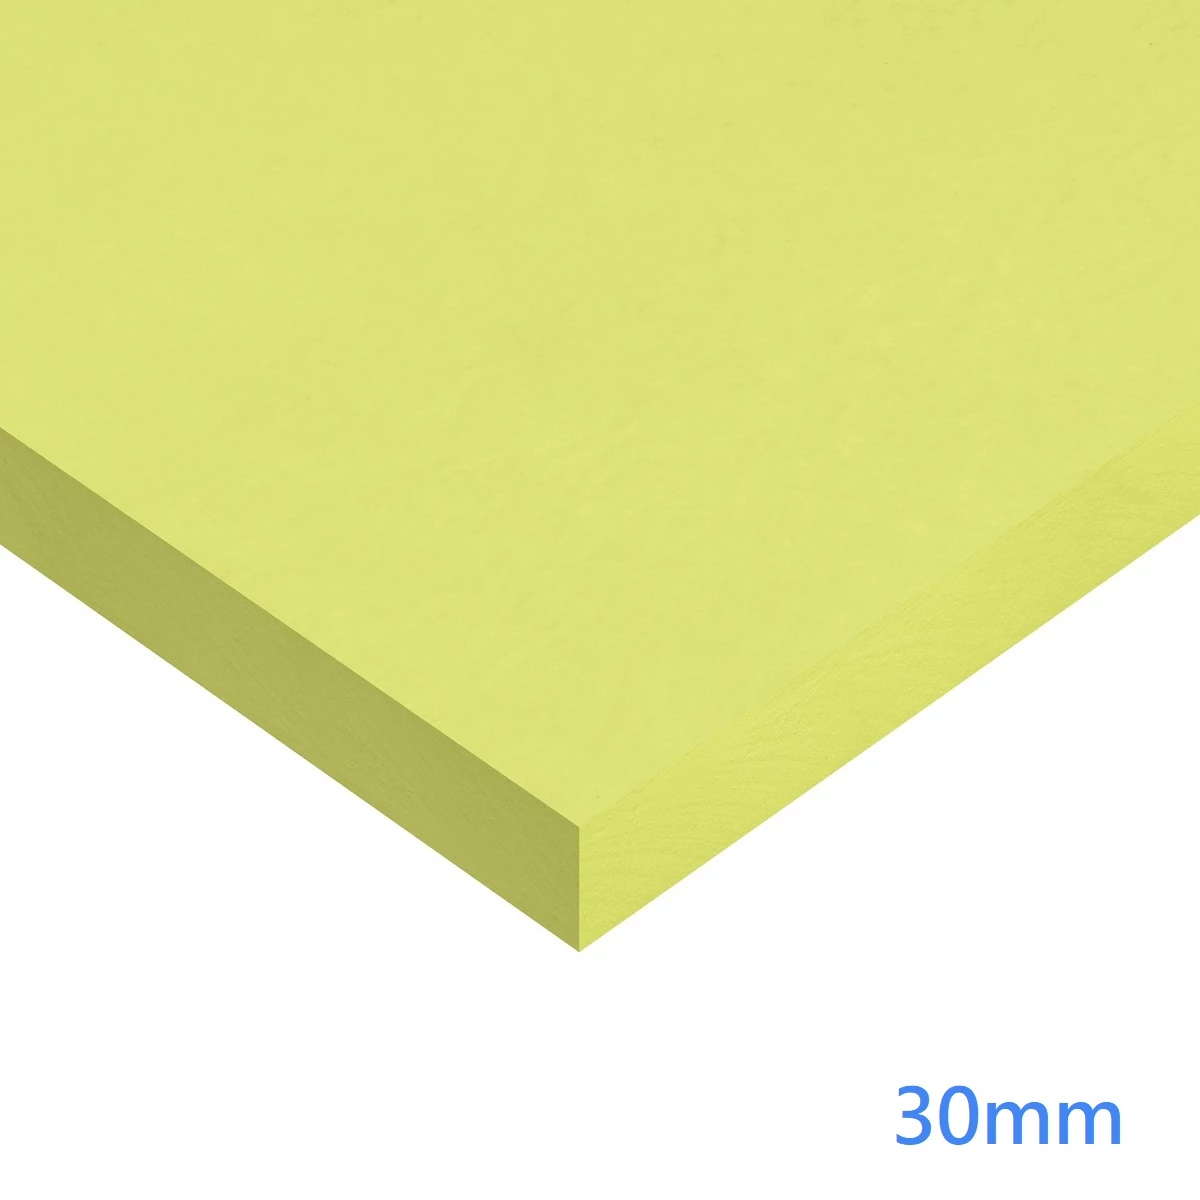 Floor insulation - Perimeter insulation - Applications - Safe. Strong.  Styrodur - BASF´s green insulation material